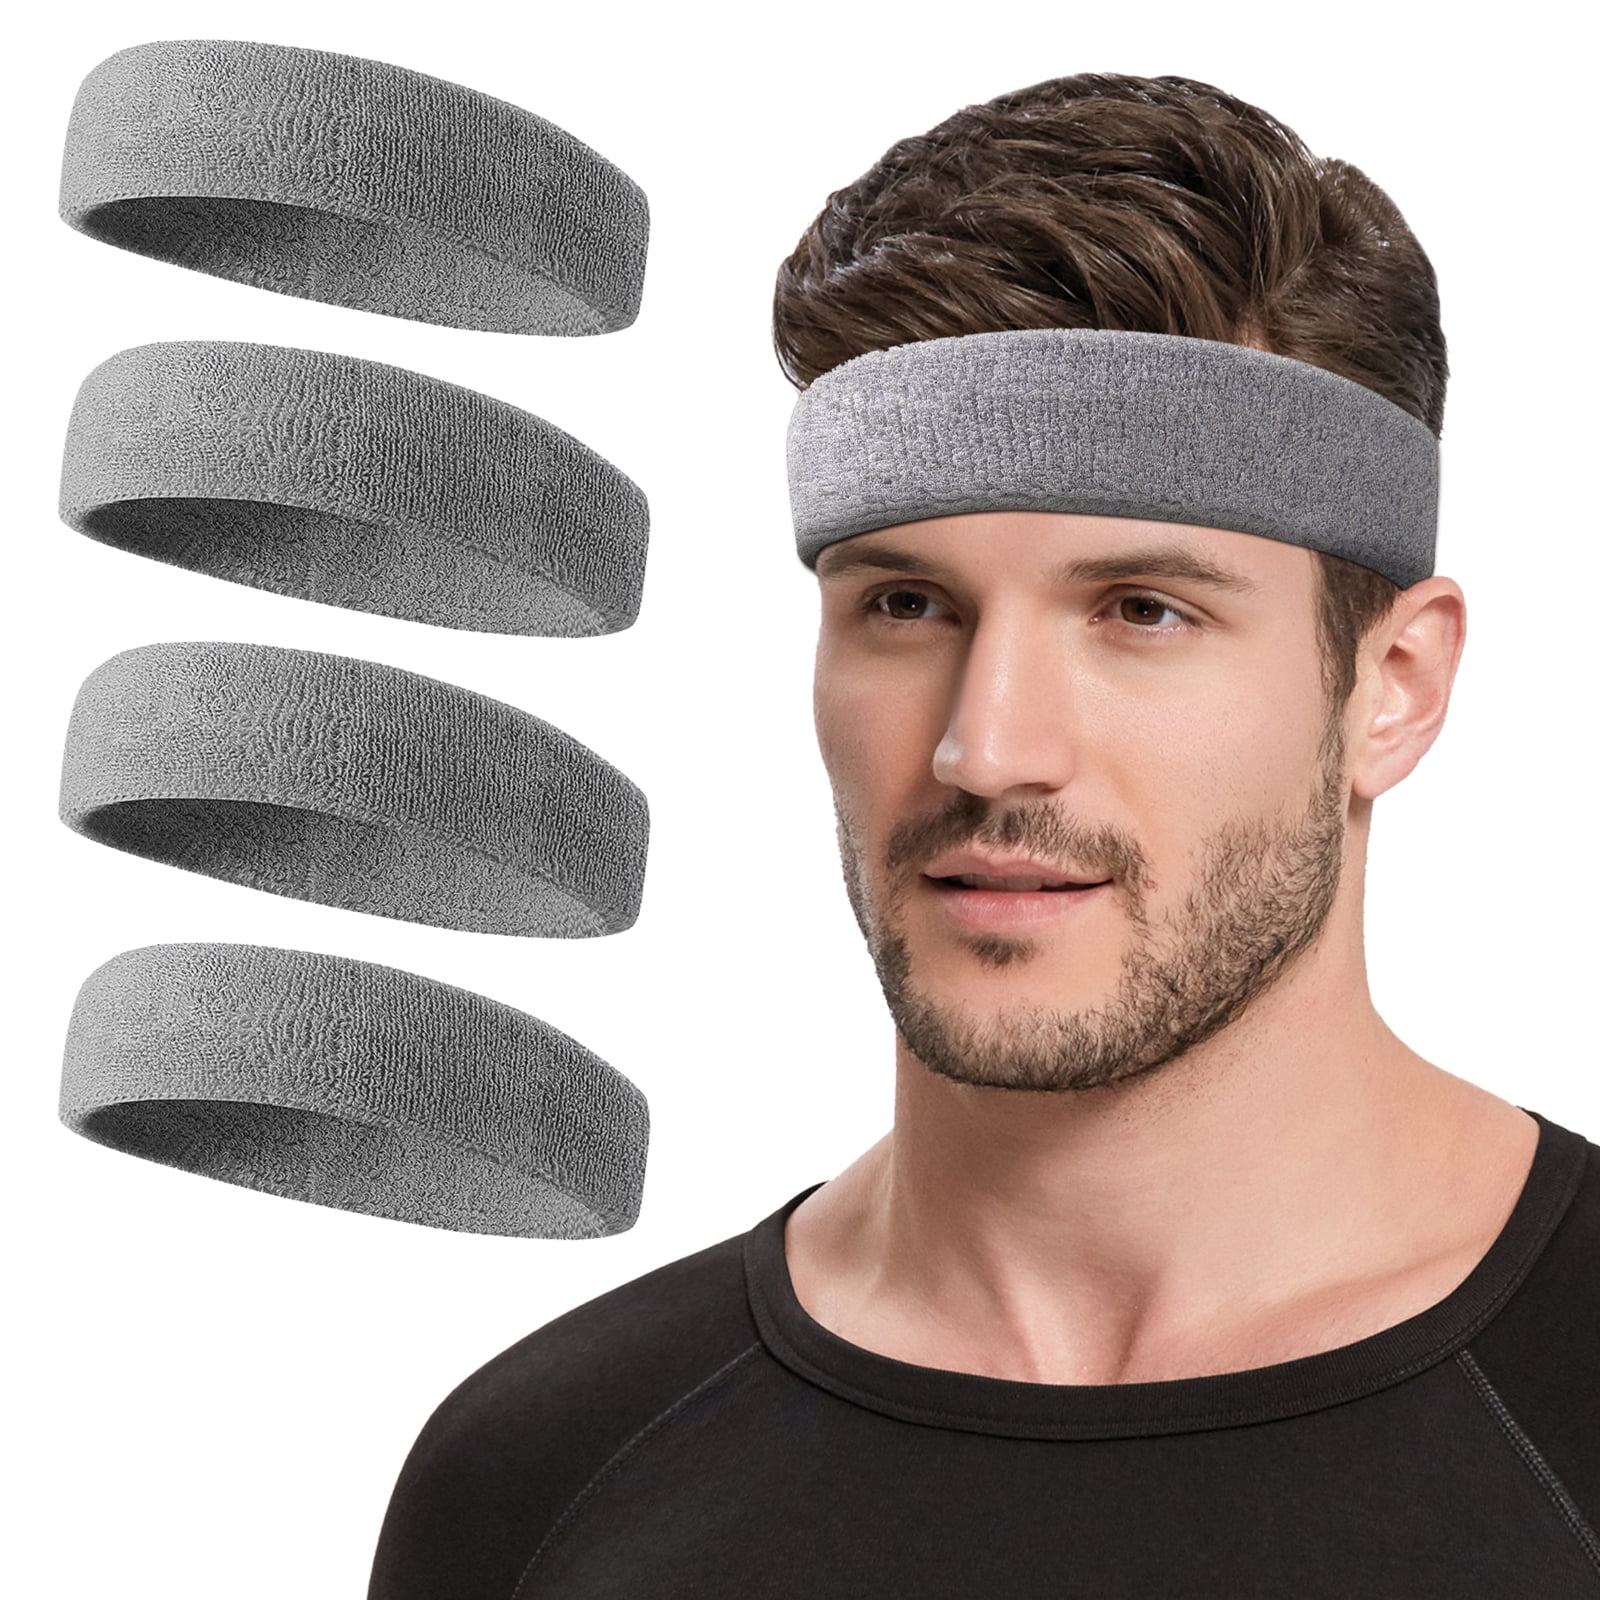 NONSTOP Sweat Bands Headbands for Men Women, Cooling Headband Pack of 4  Workout Sweatbands Moisture Wicking Absorbent Head Bands, Stretch No Slip Men's  Headbands for Yoga Running Sports Hiking 